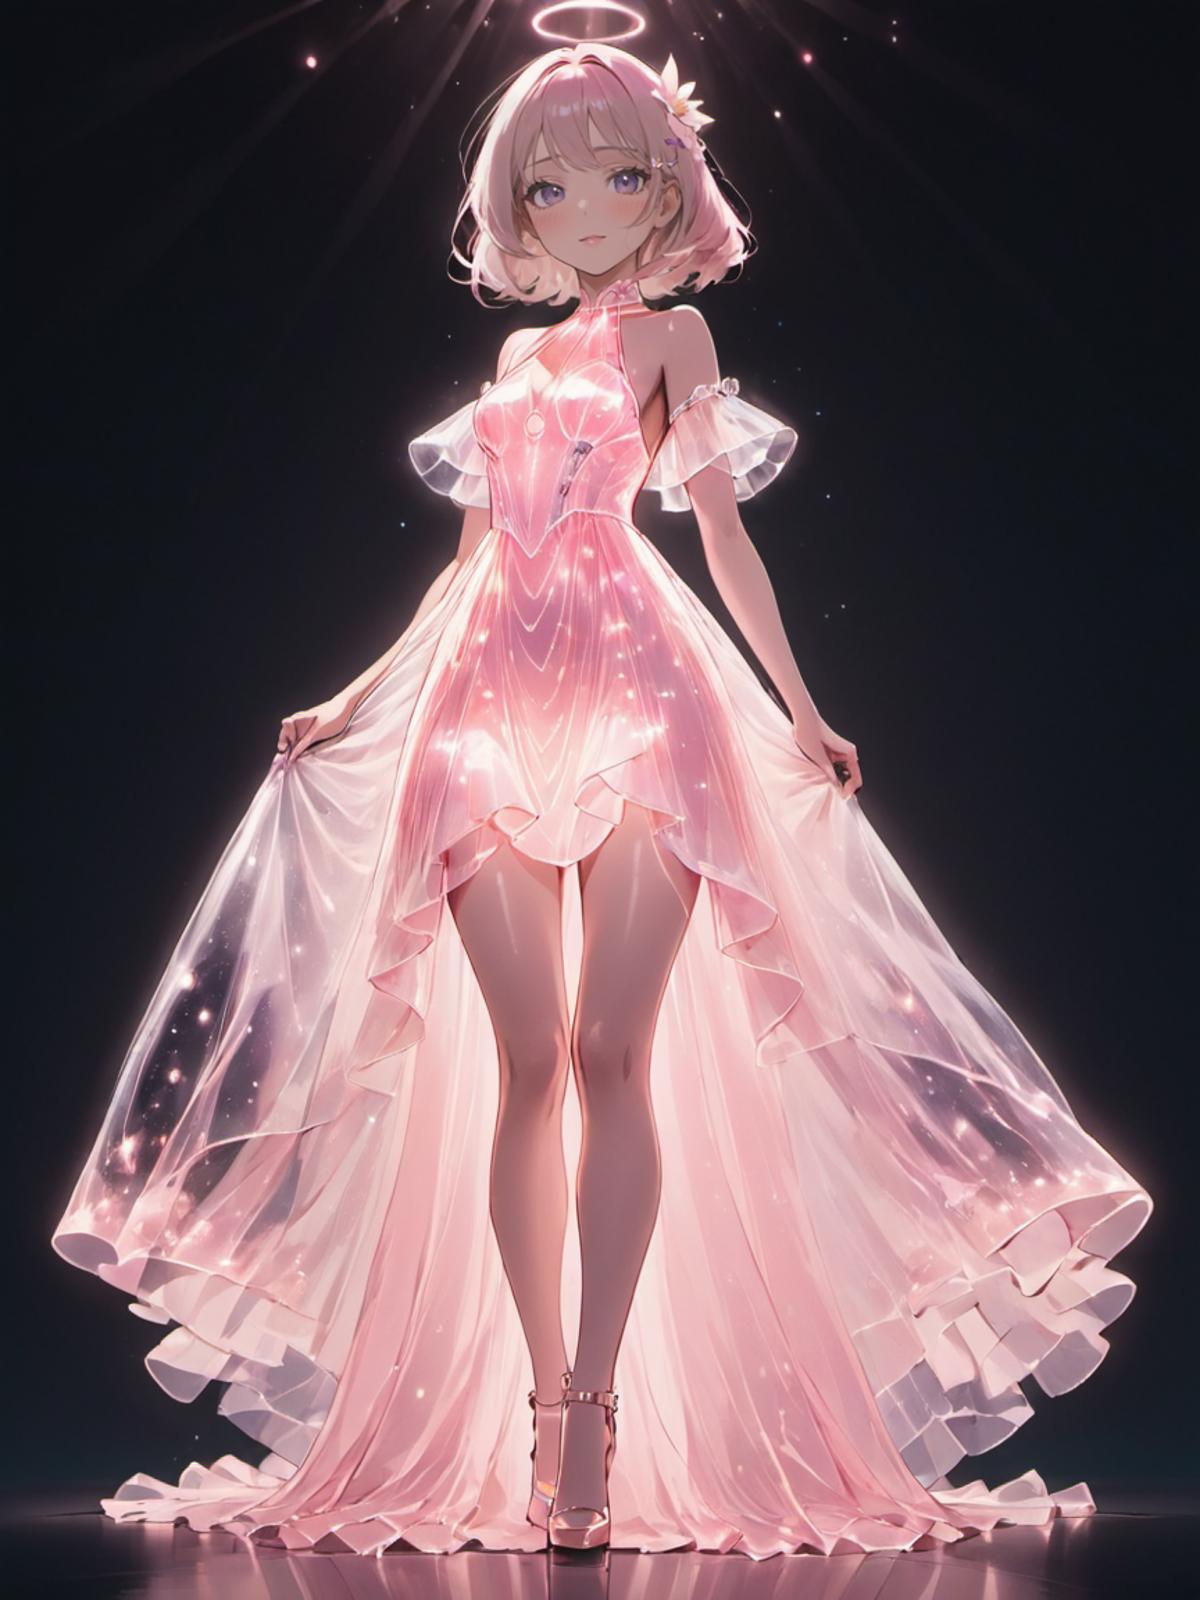 XL Bioluminescent Dress image by n15g